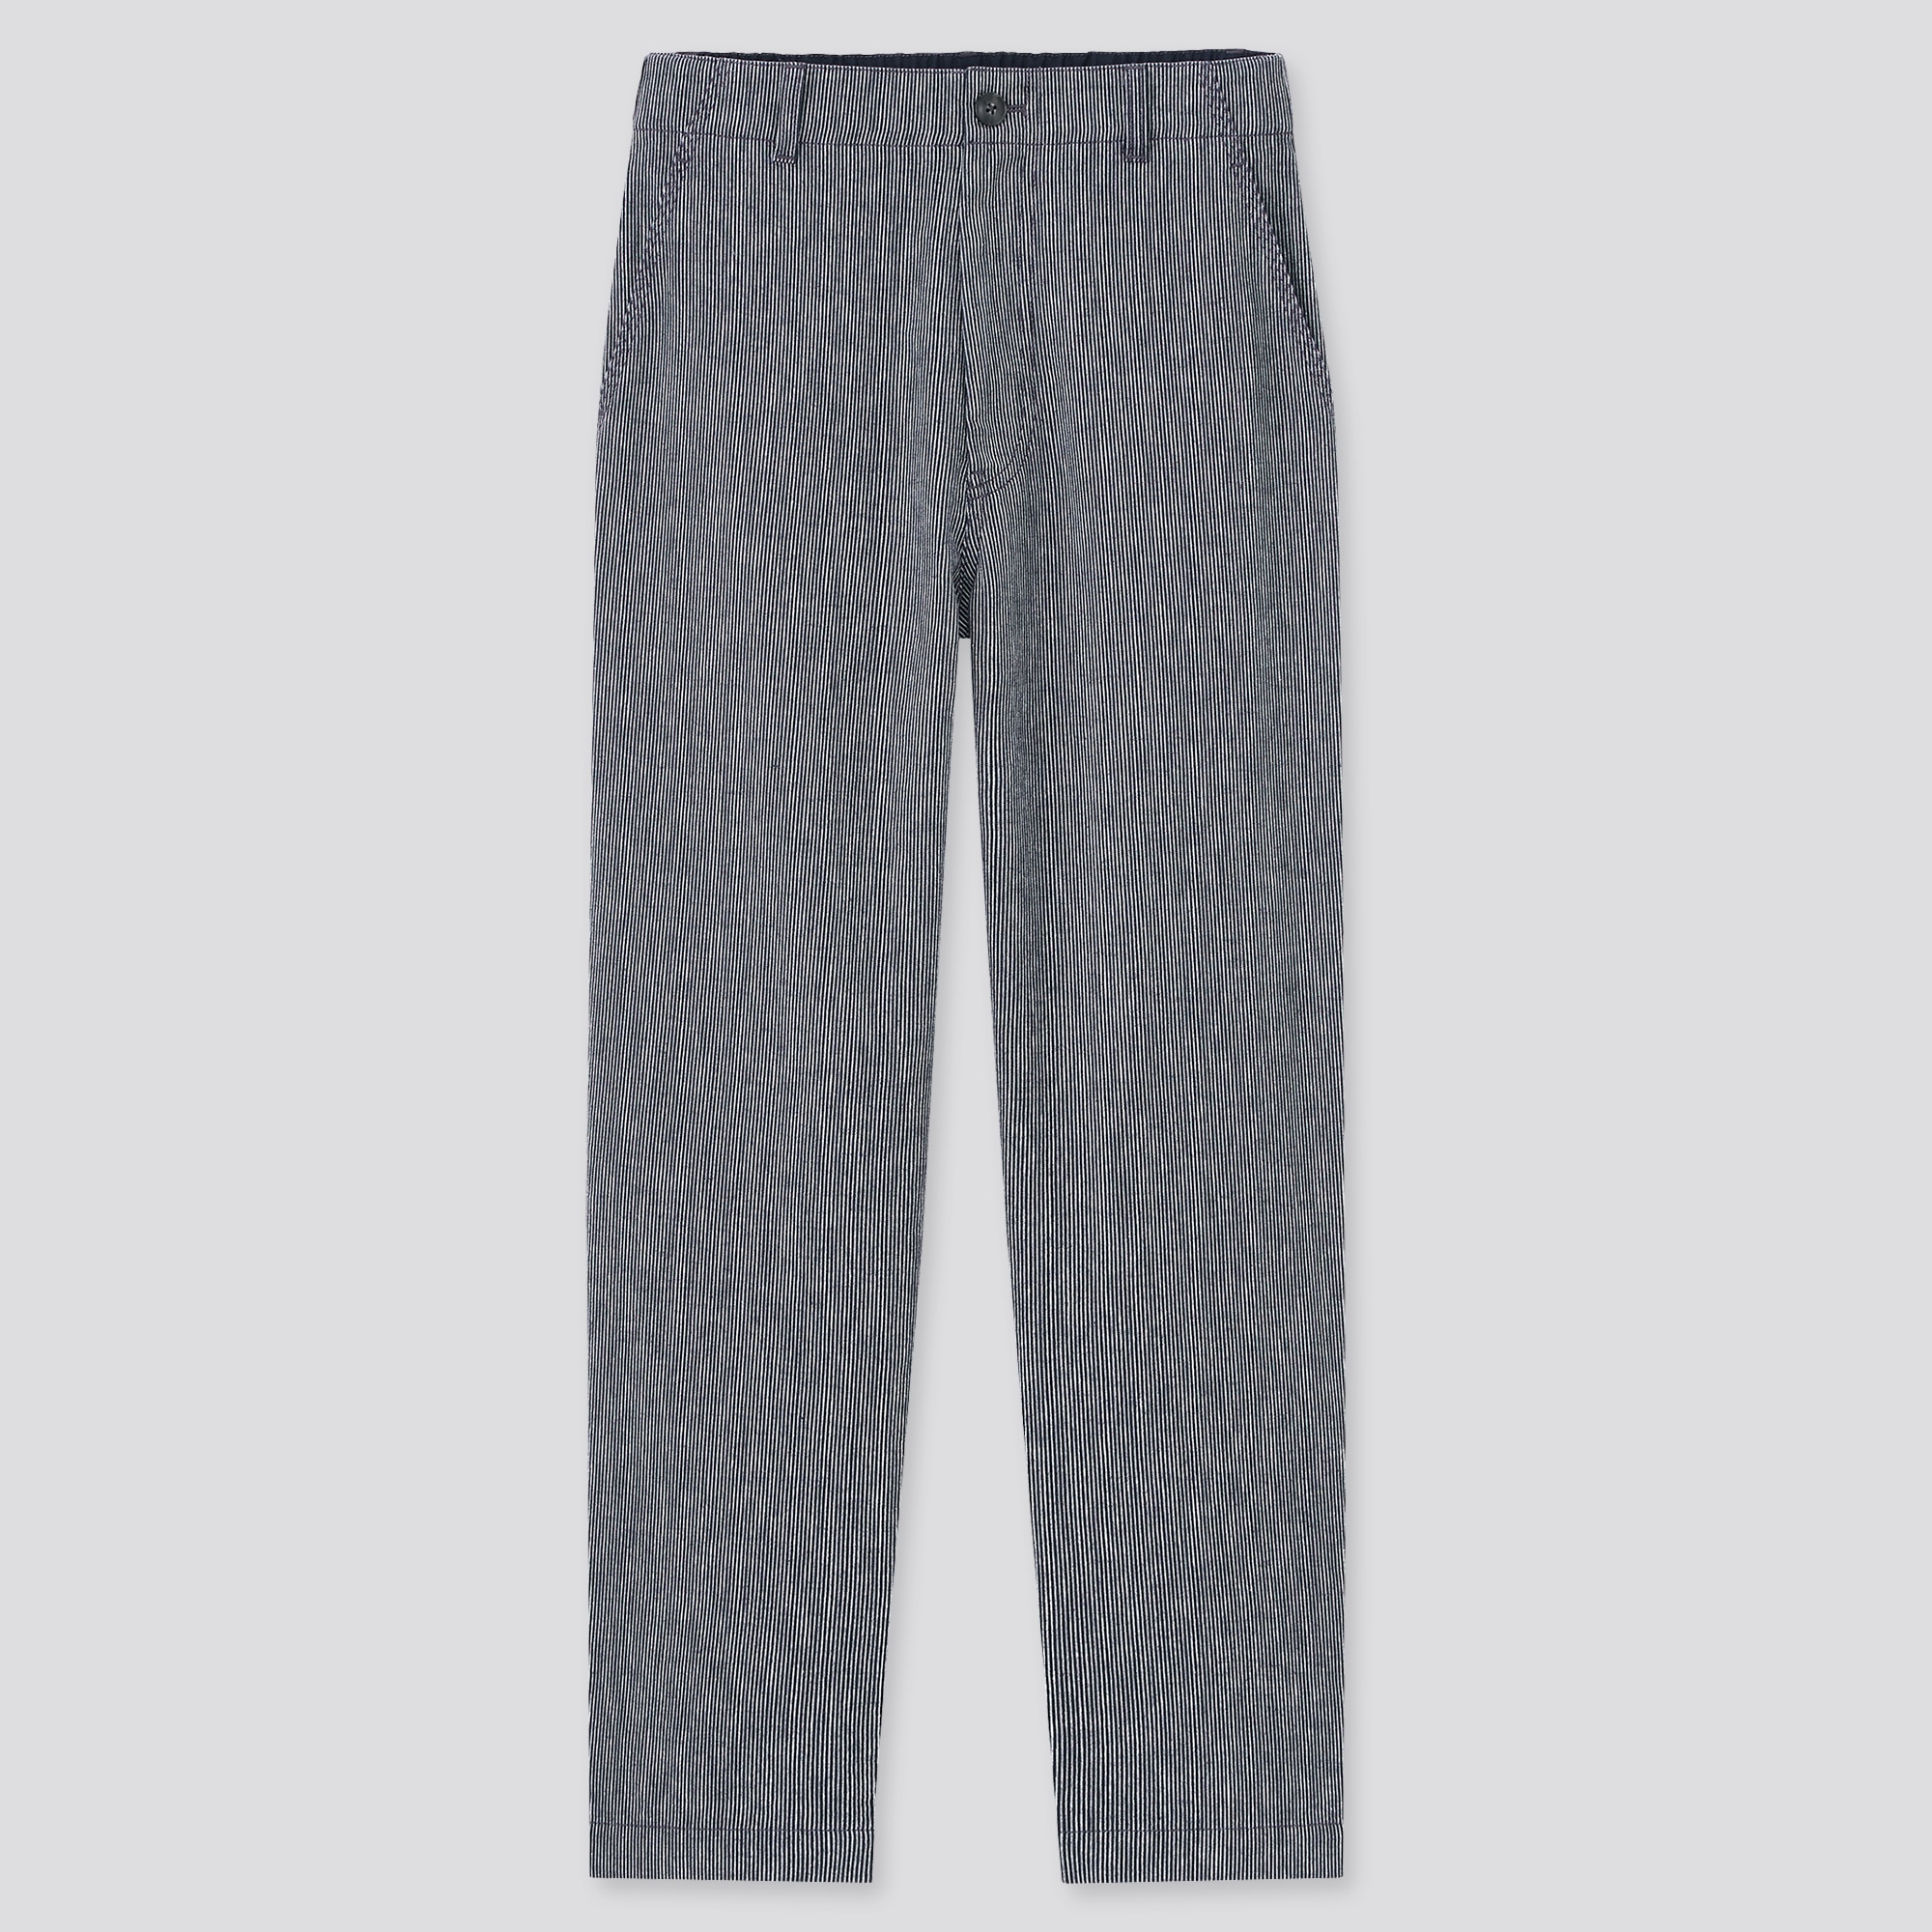 Uniqlo Pants Women M Medium Dress Straight Crop Mid Rise Striped Trousers  Gray | eBay